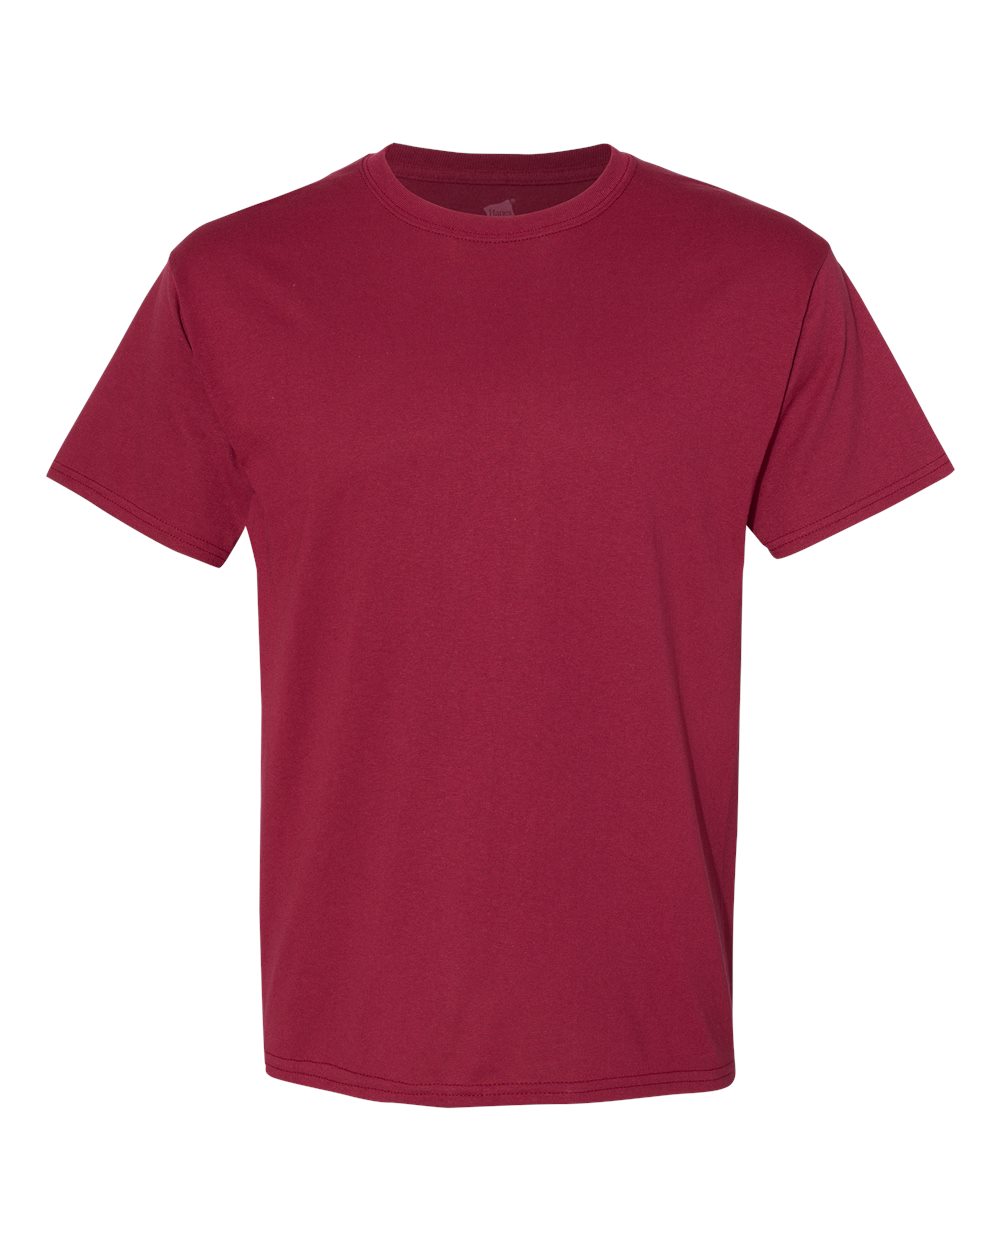 Hanes EcoSmart T-Shirt - SHIRT PRINTING 4U